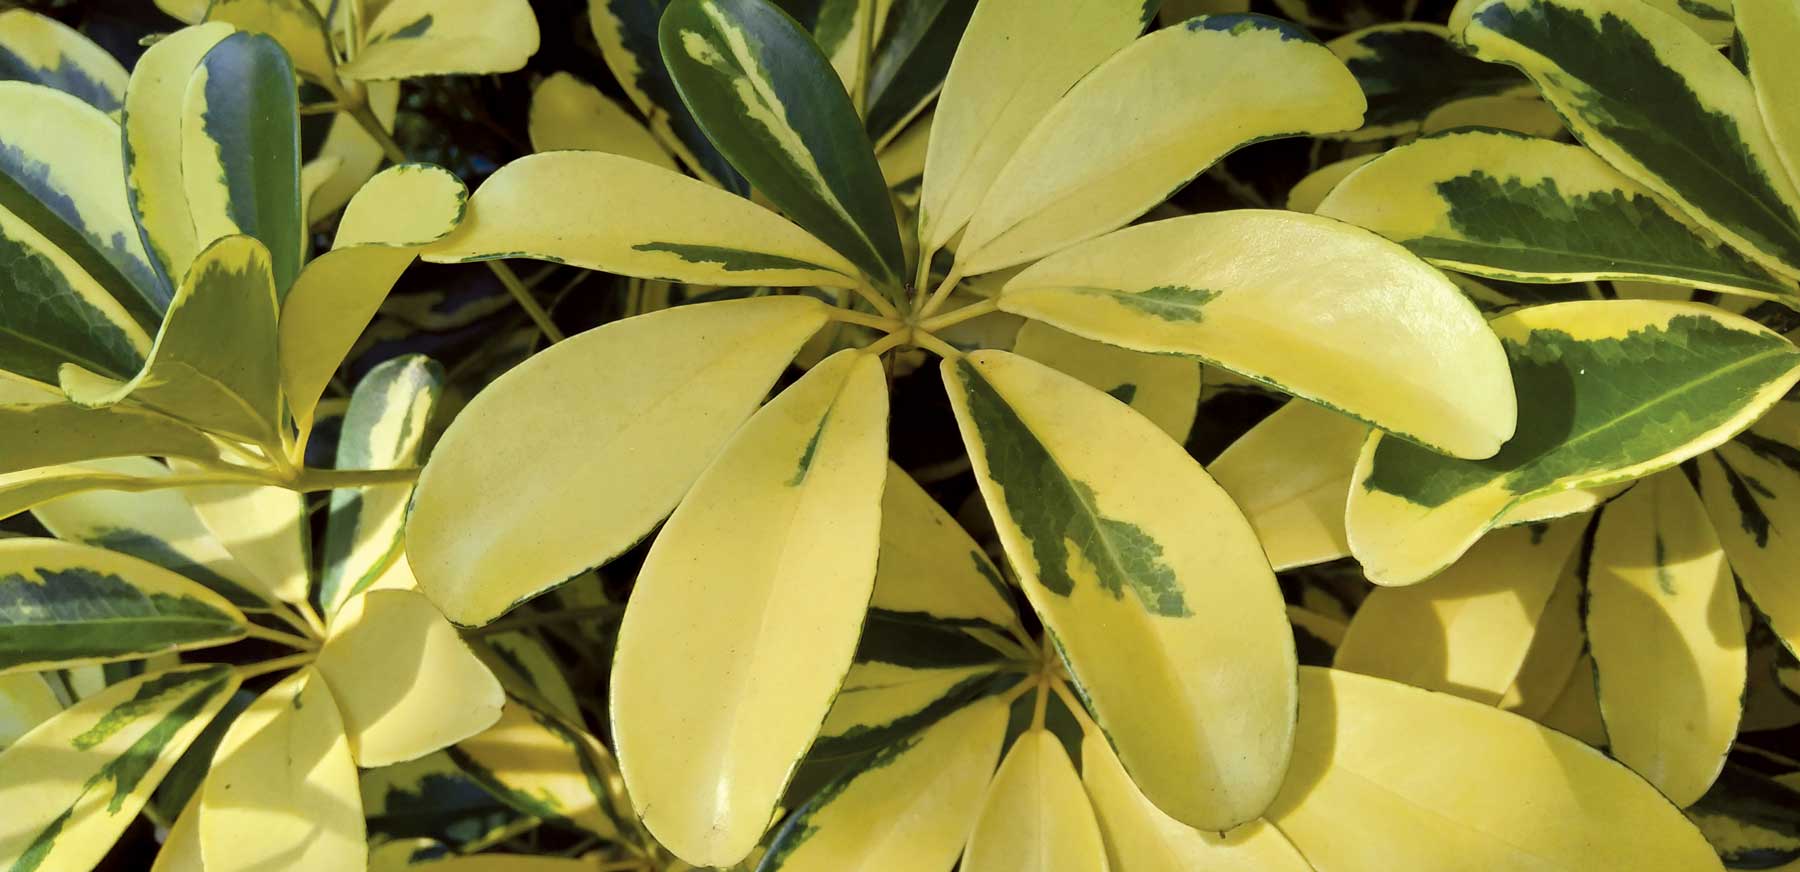 Abrolicola plant